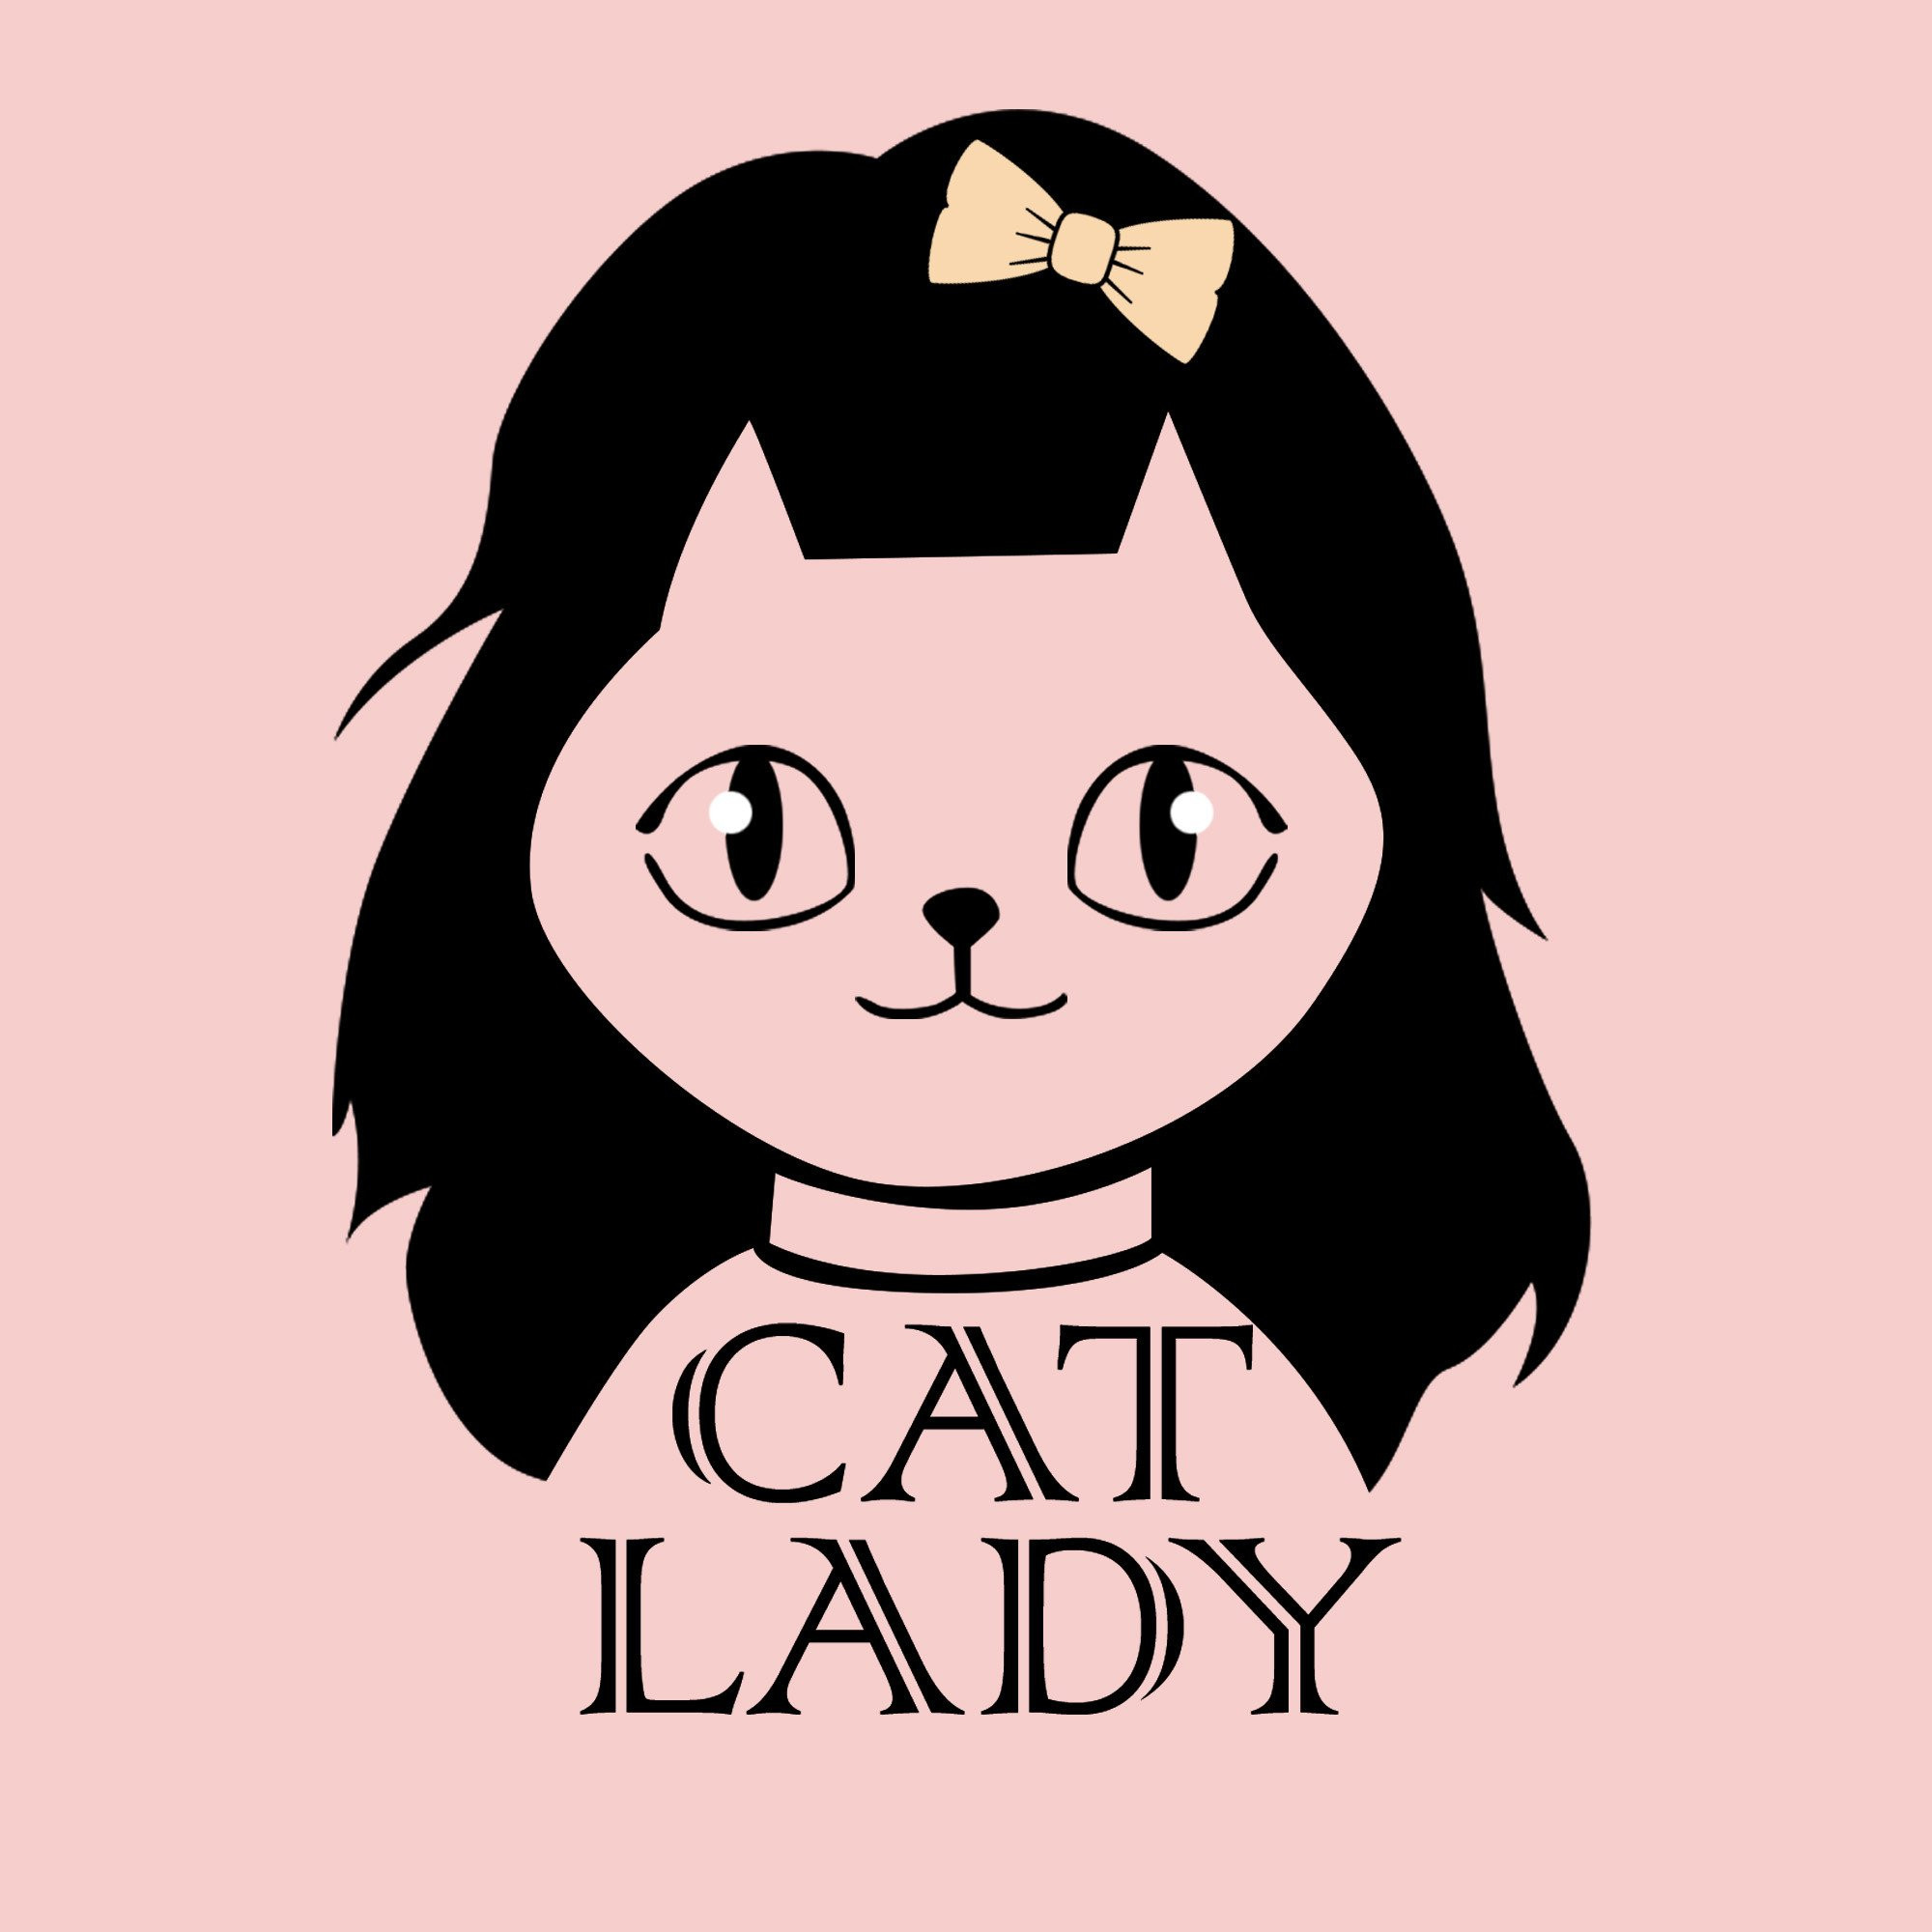 Cat Lady's profielfoto